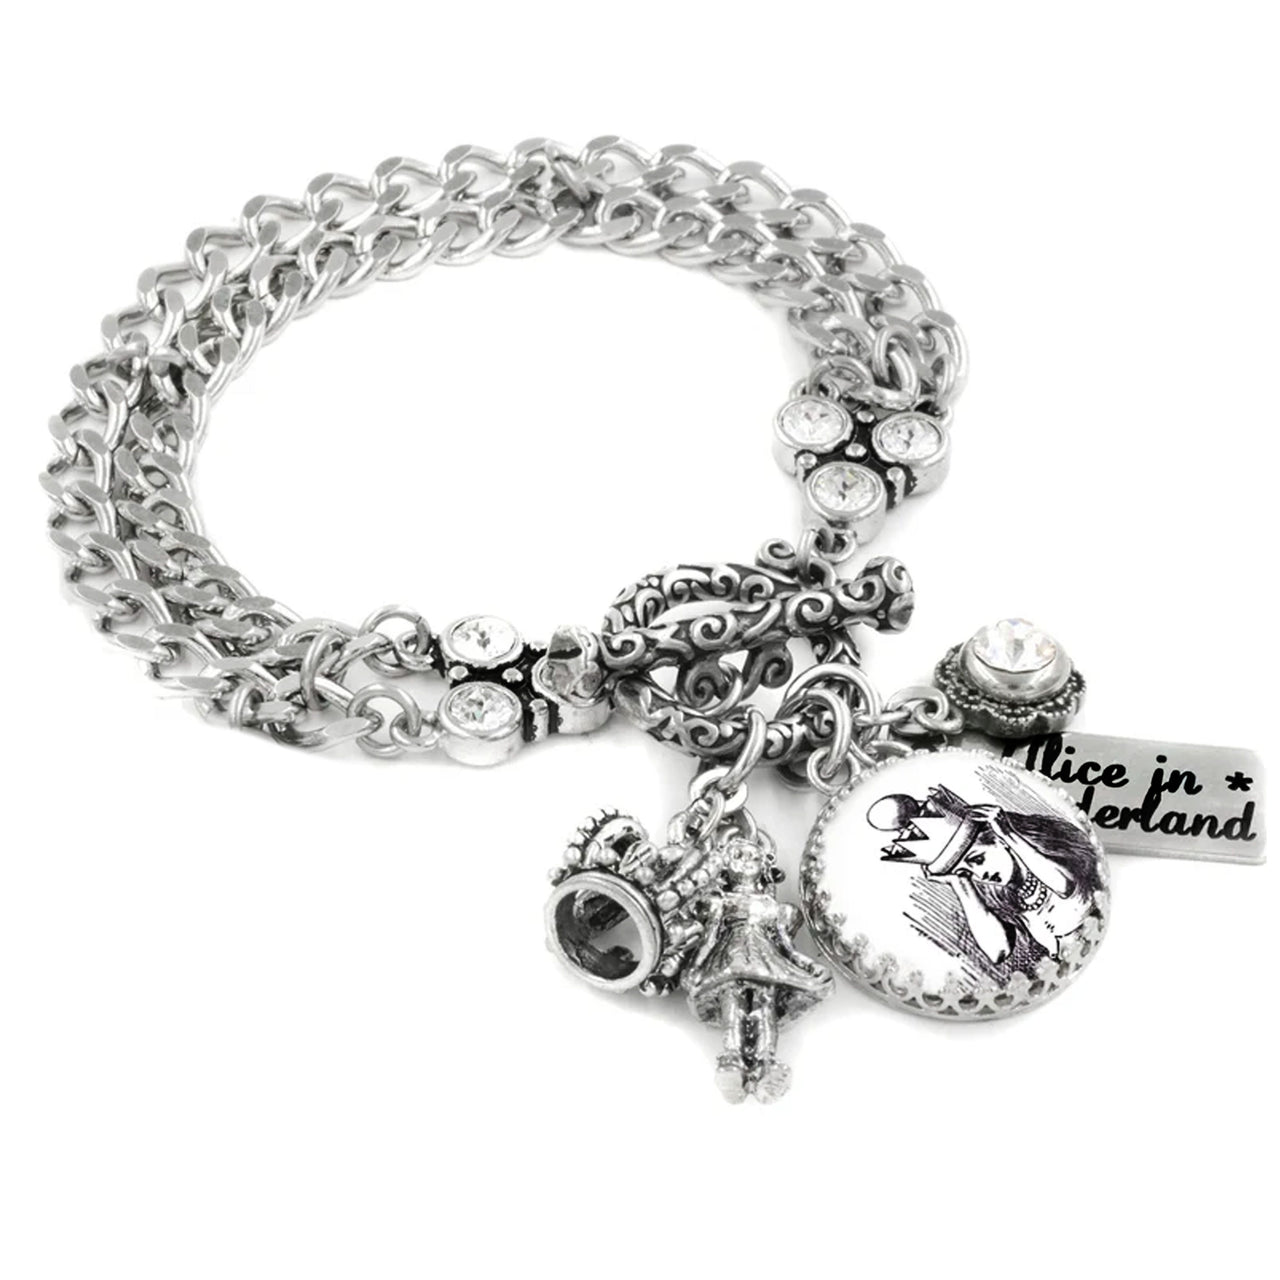 alice in wonderland chain bracelet